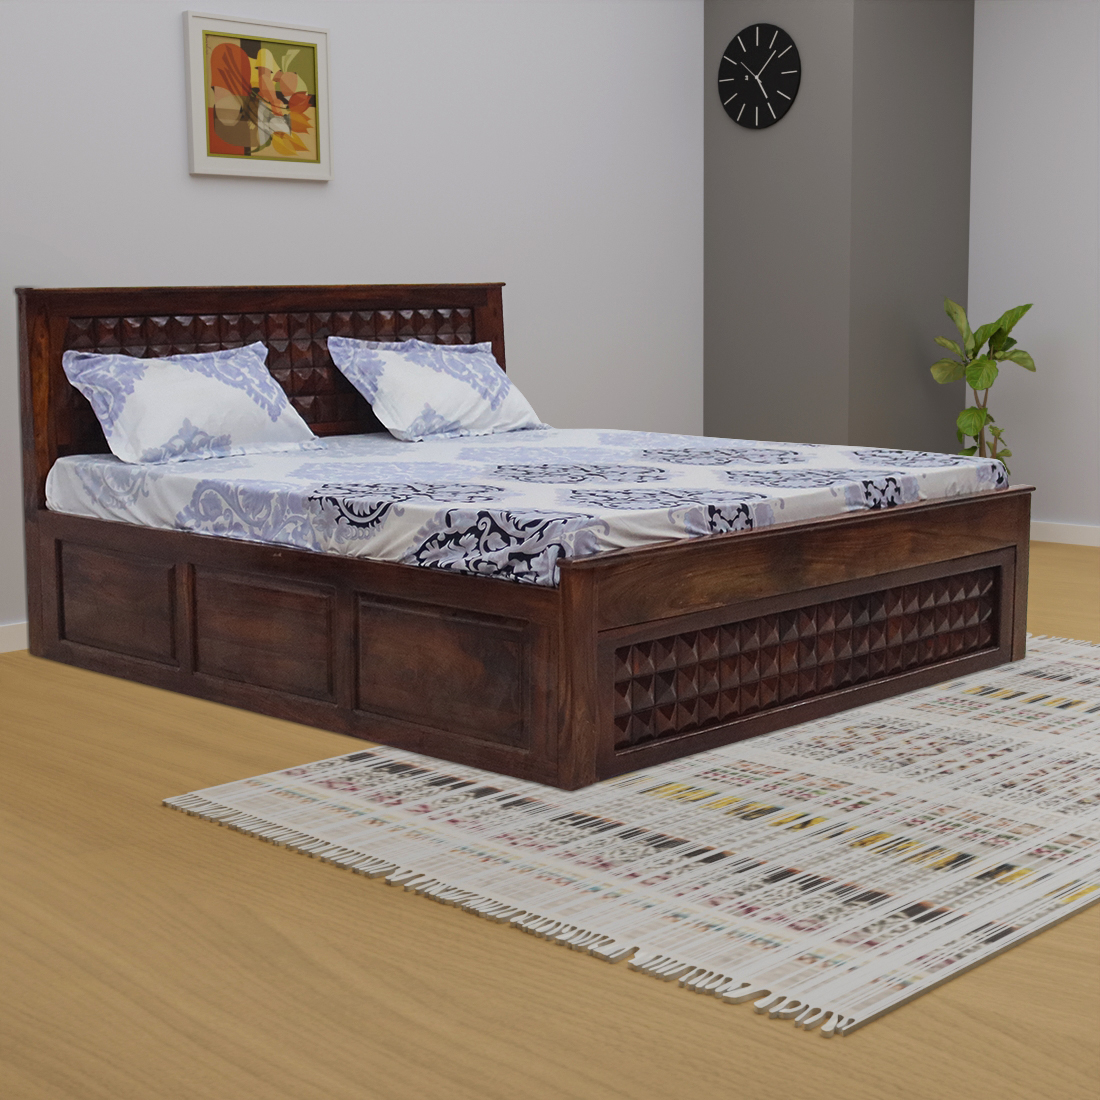 Aaram by zebrs Wood Oak Finish Queen Size Double Cart Bed